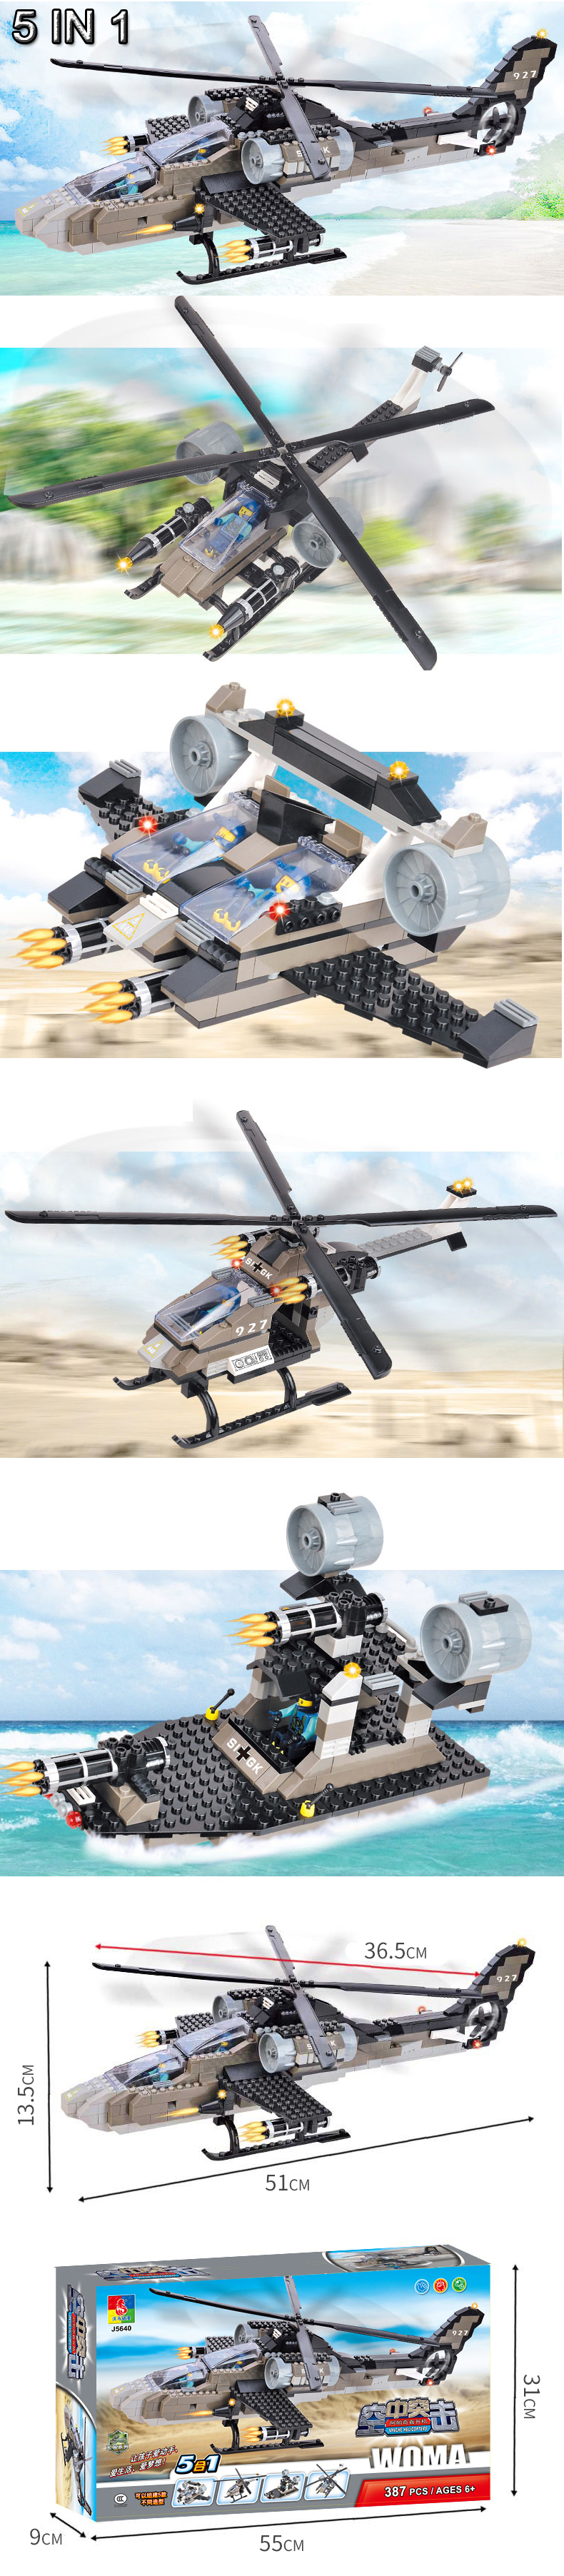 WOMA TOYS Compatible major brands bricks 405pcs Plastic Building Blocks Toy Helicopter Transform model jouet oyuncak